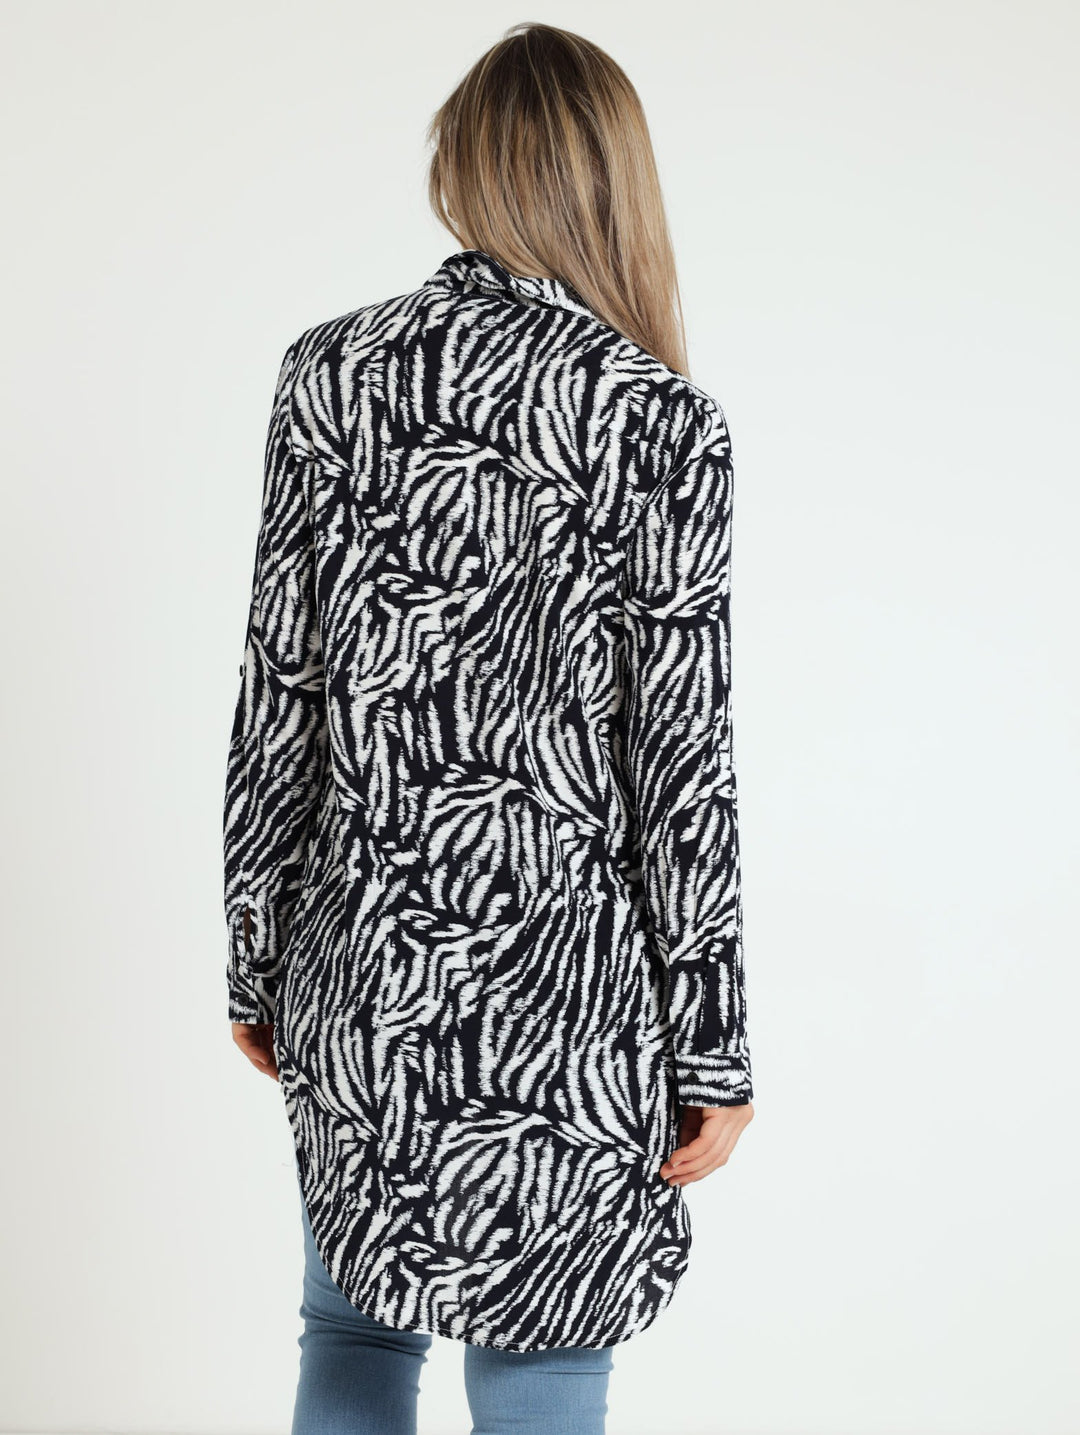 Zebra Print Blouse - Navy/White